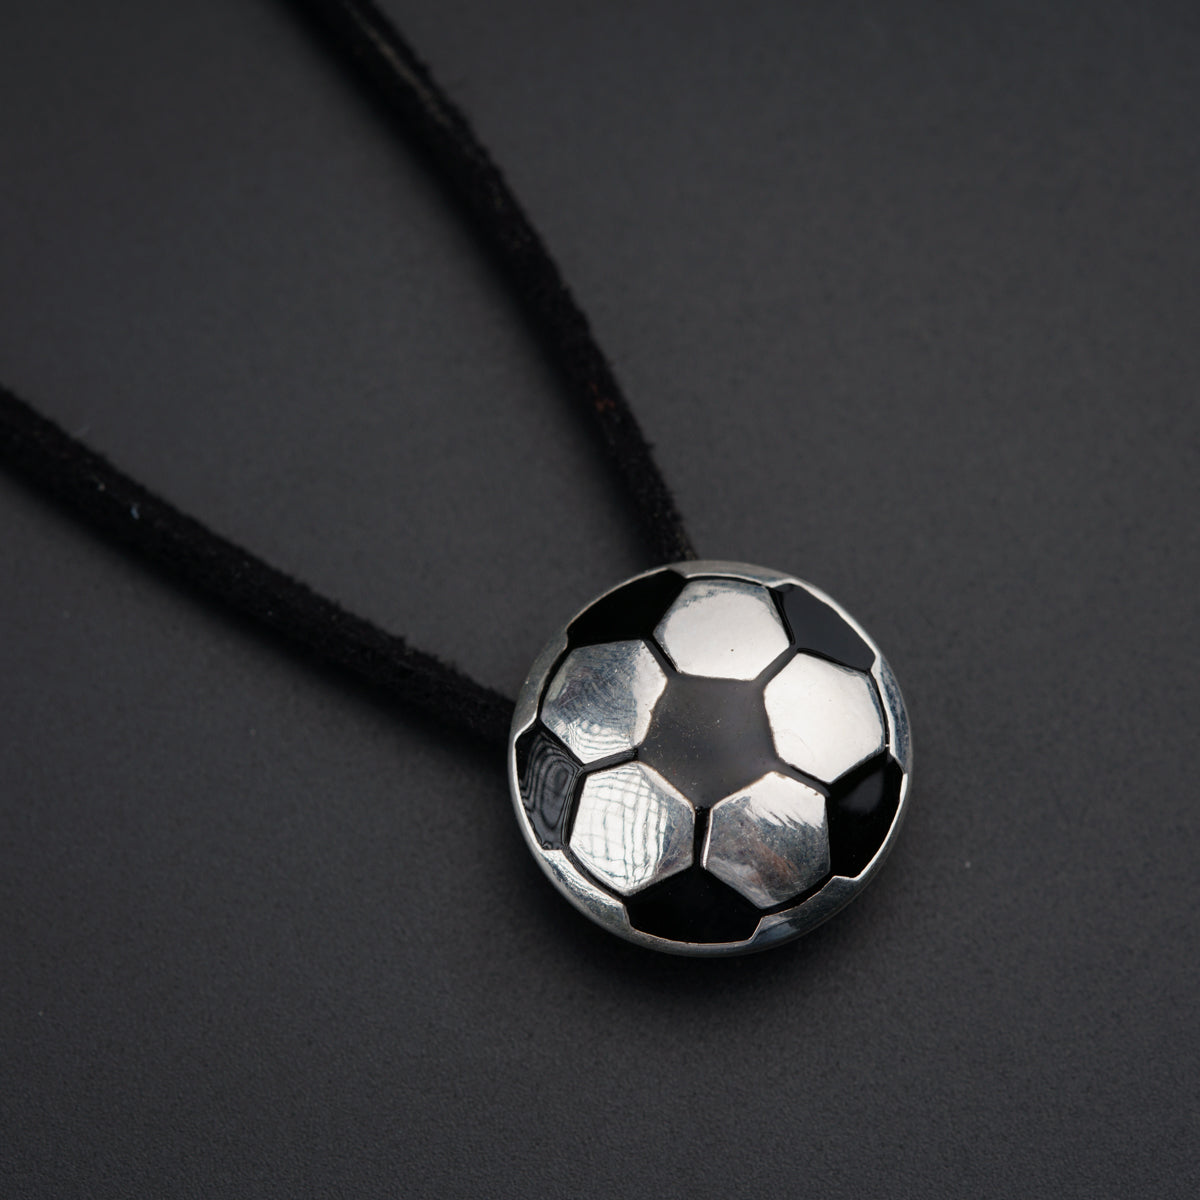 a soccer ball pendant on a black cord